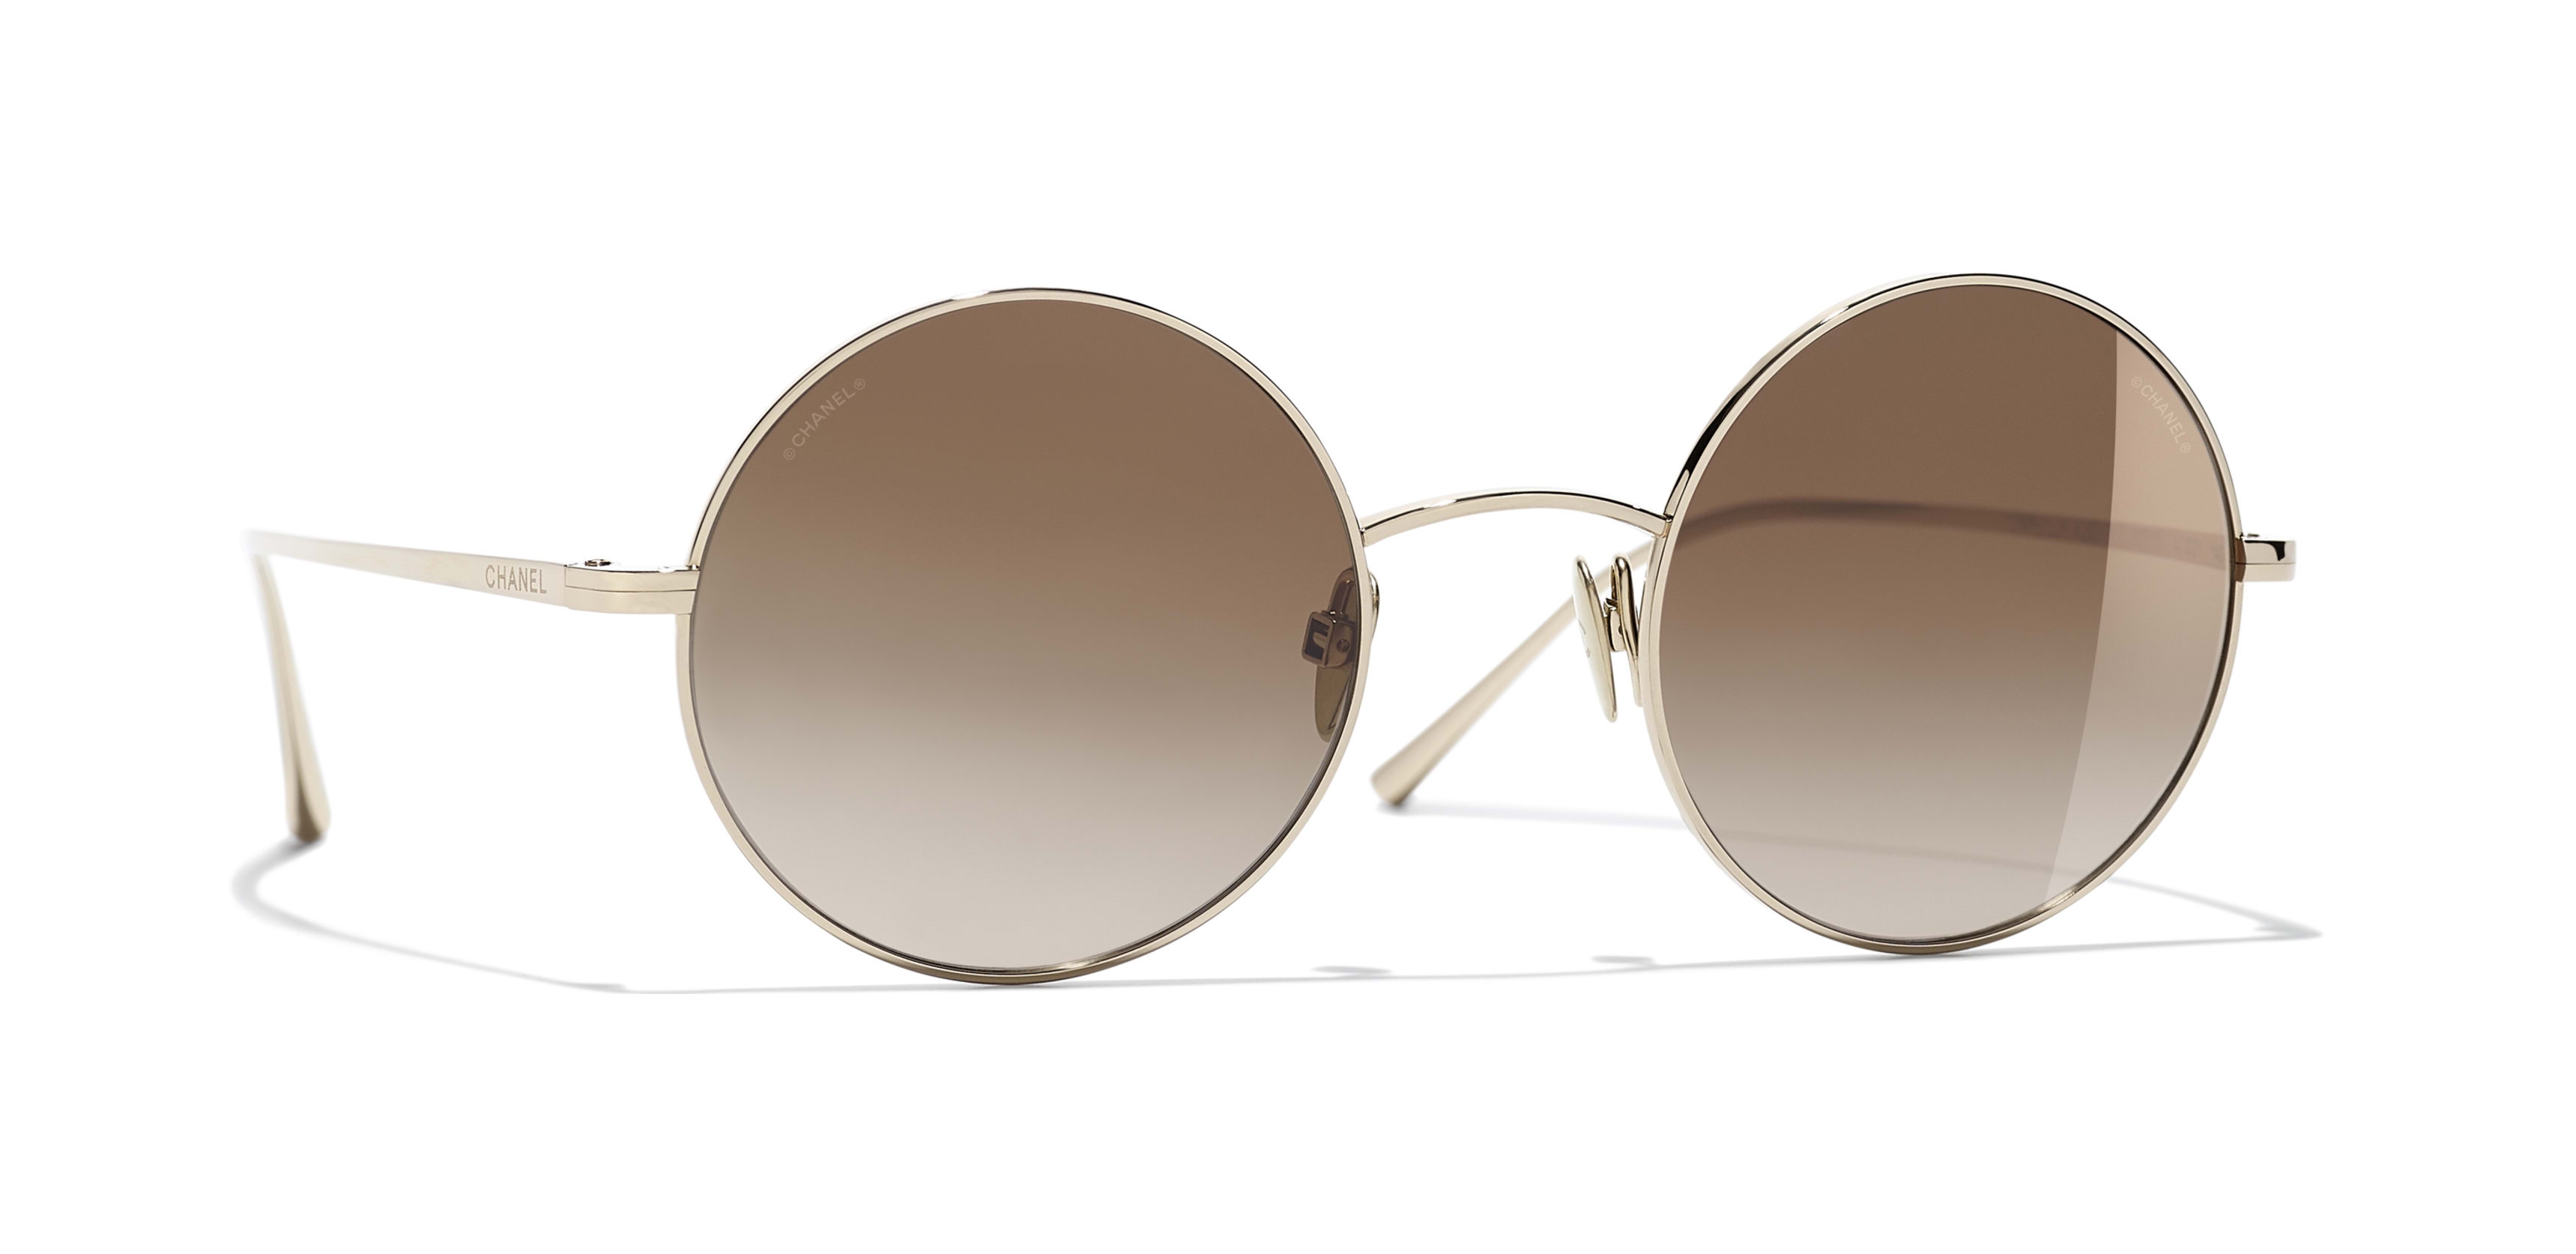 Chanel - Round Sunglasses - Gold Brown Gradient - Chanel Eyewear - Avvenice